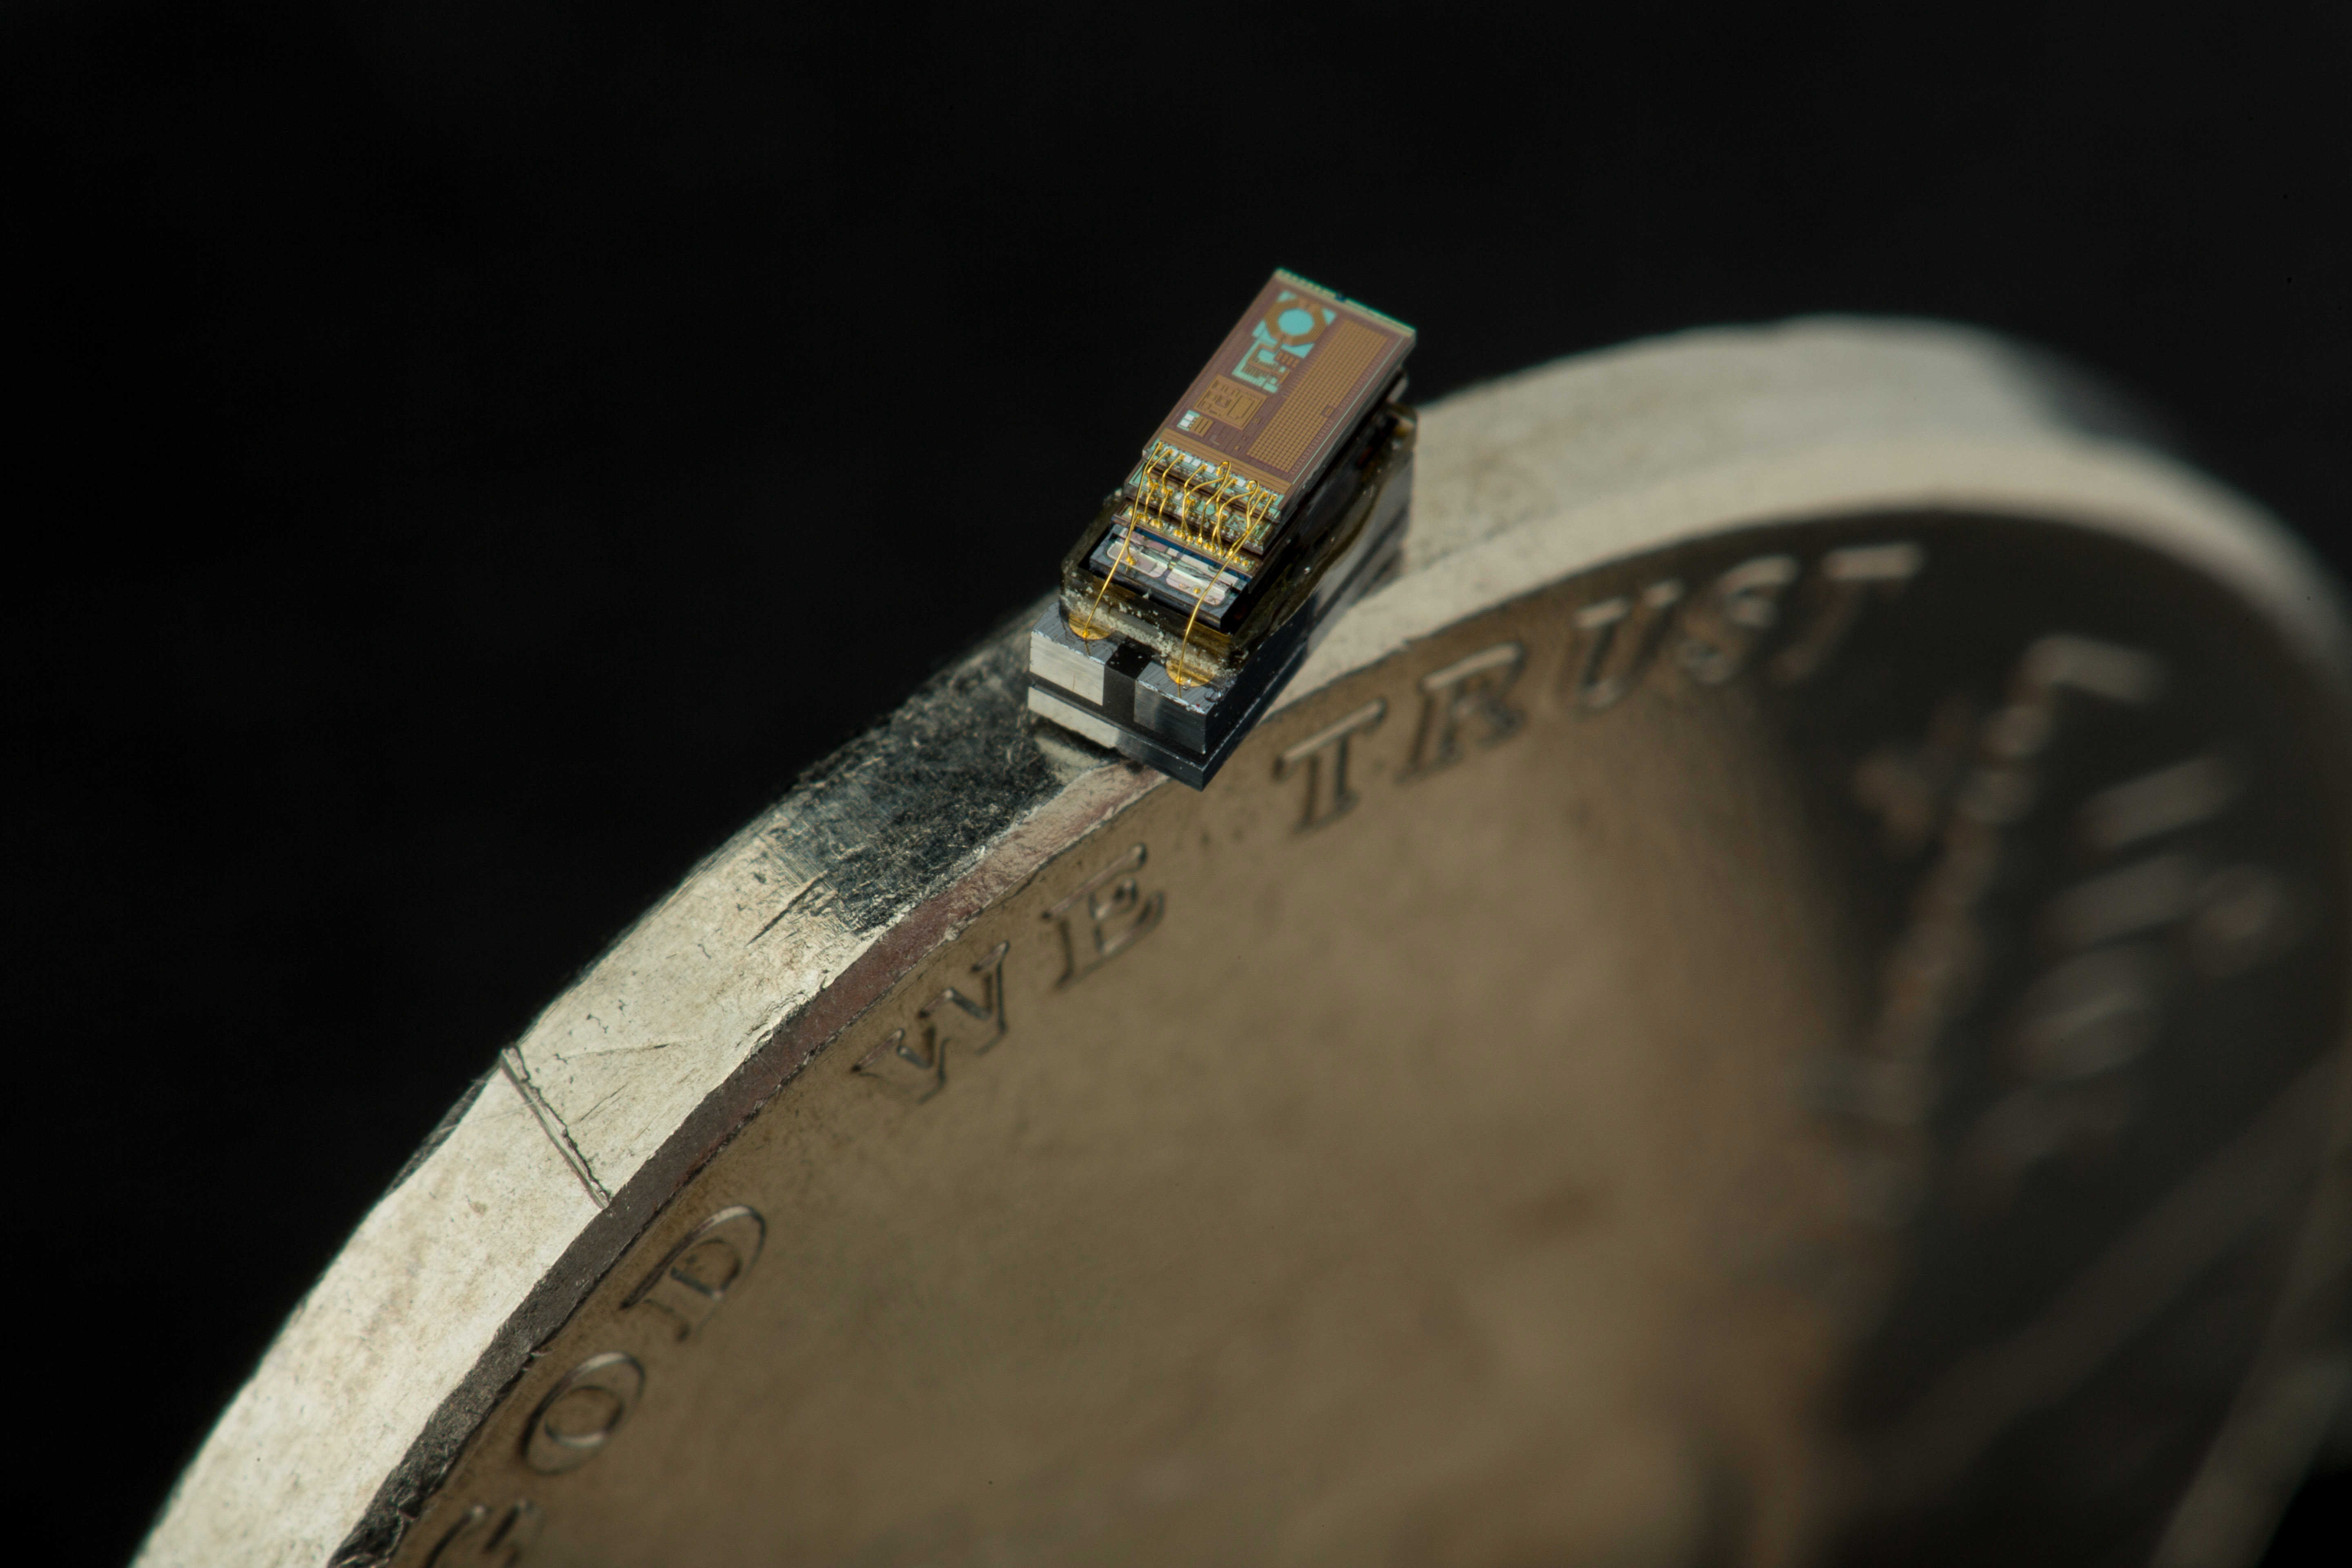 microcomputer balanced on the rim of a nickle